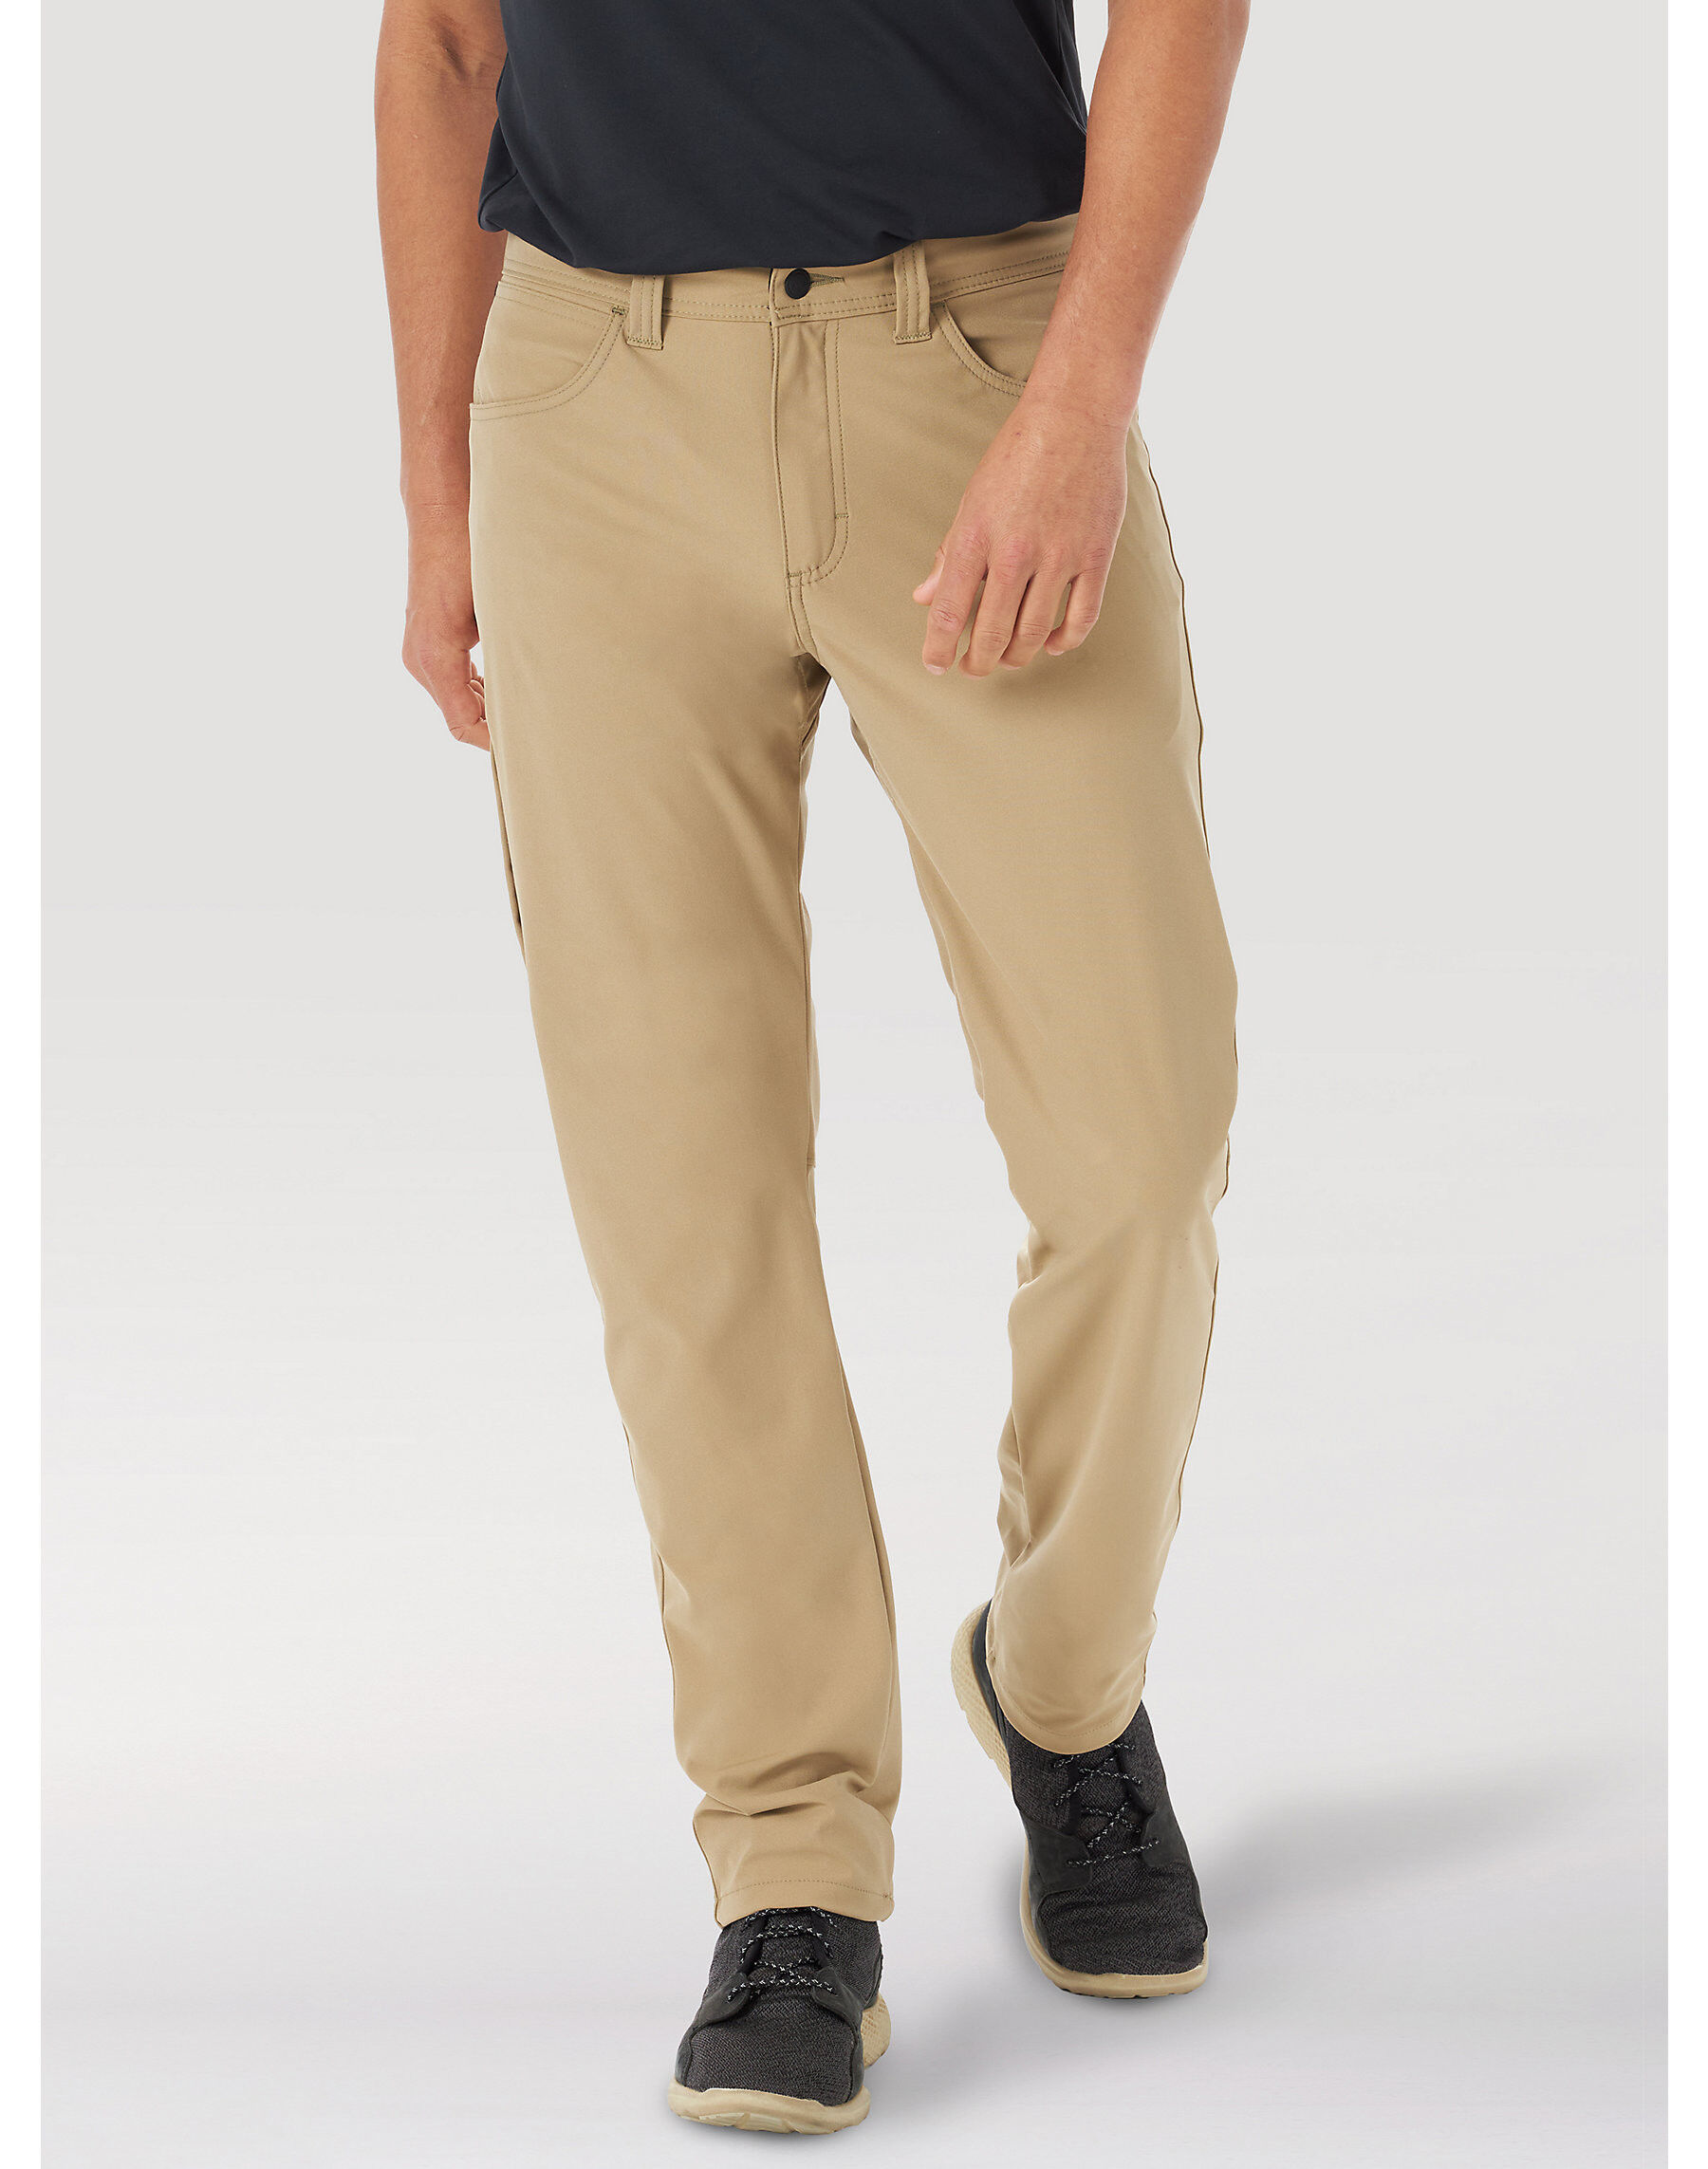 Wrangler All Terrain Gear Fwds 5 Pocket Pant - Pantalones de senderismo - Hombre | Hardloop